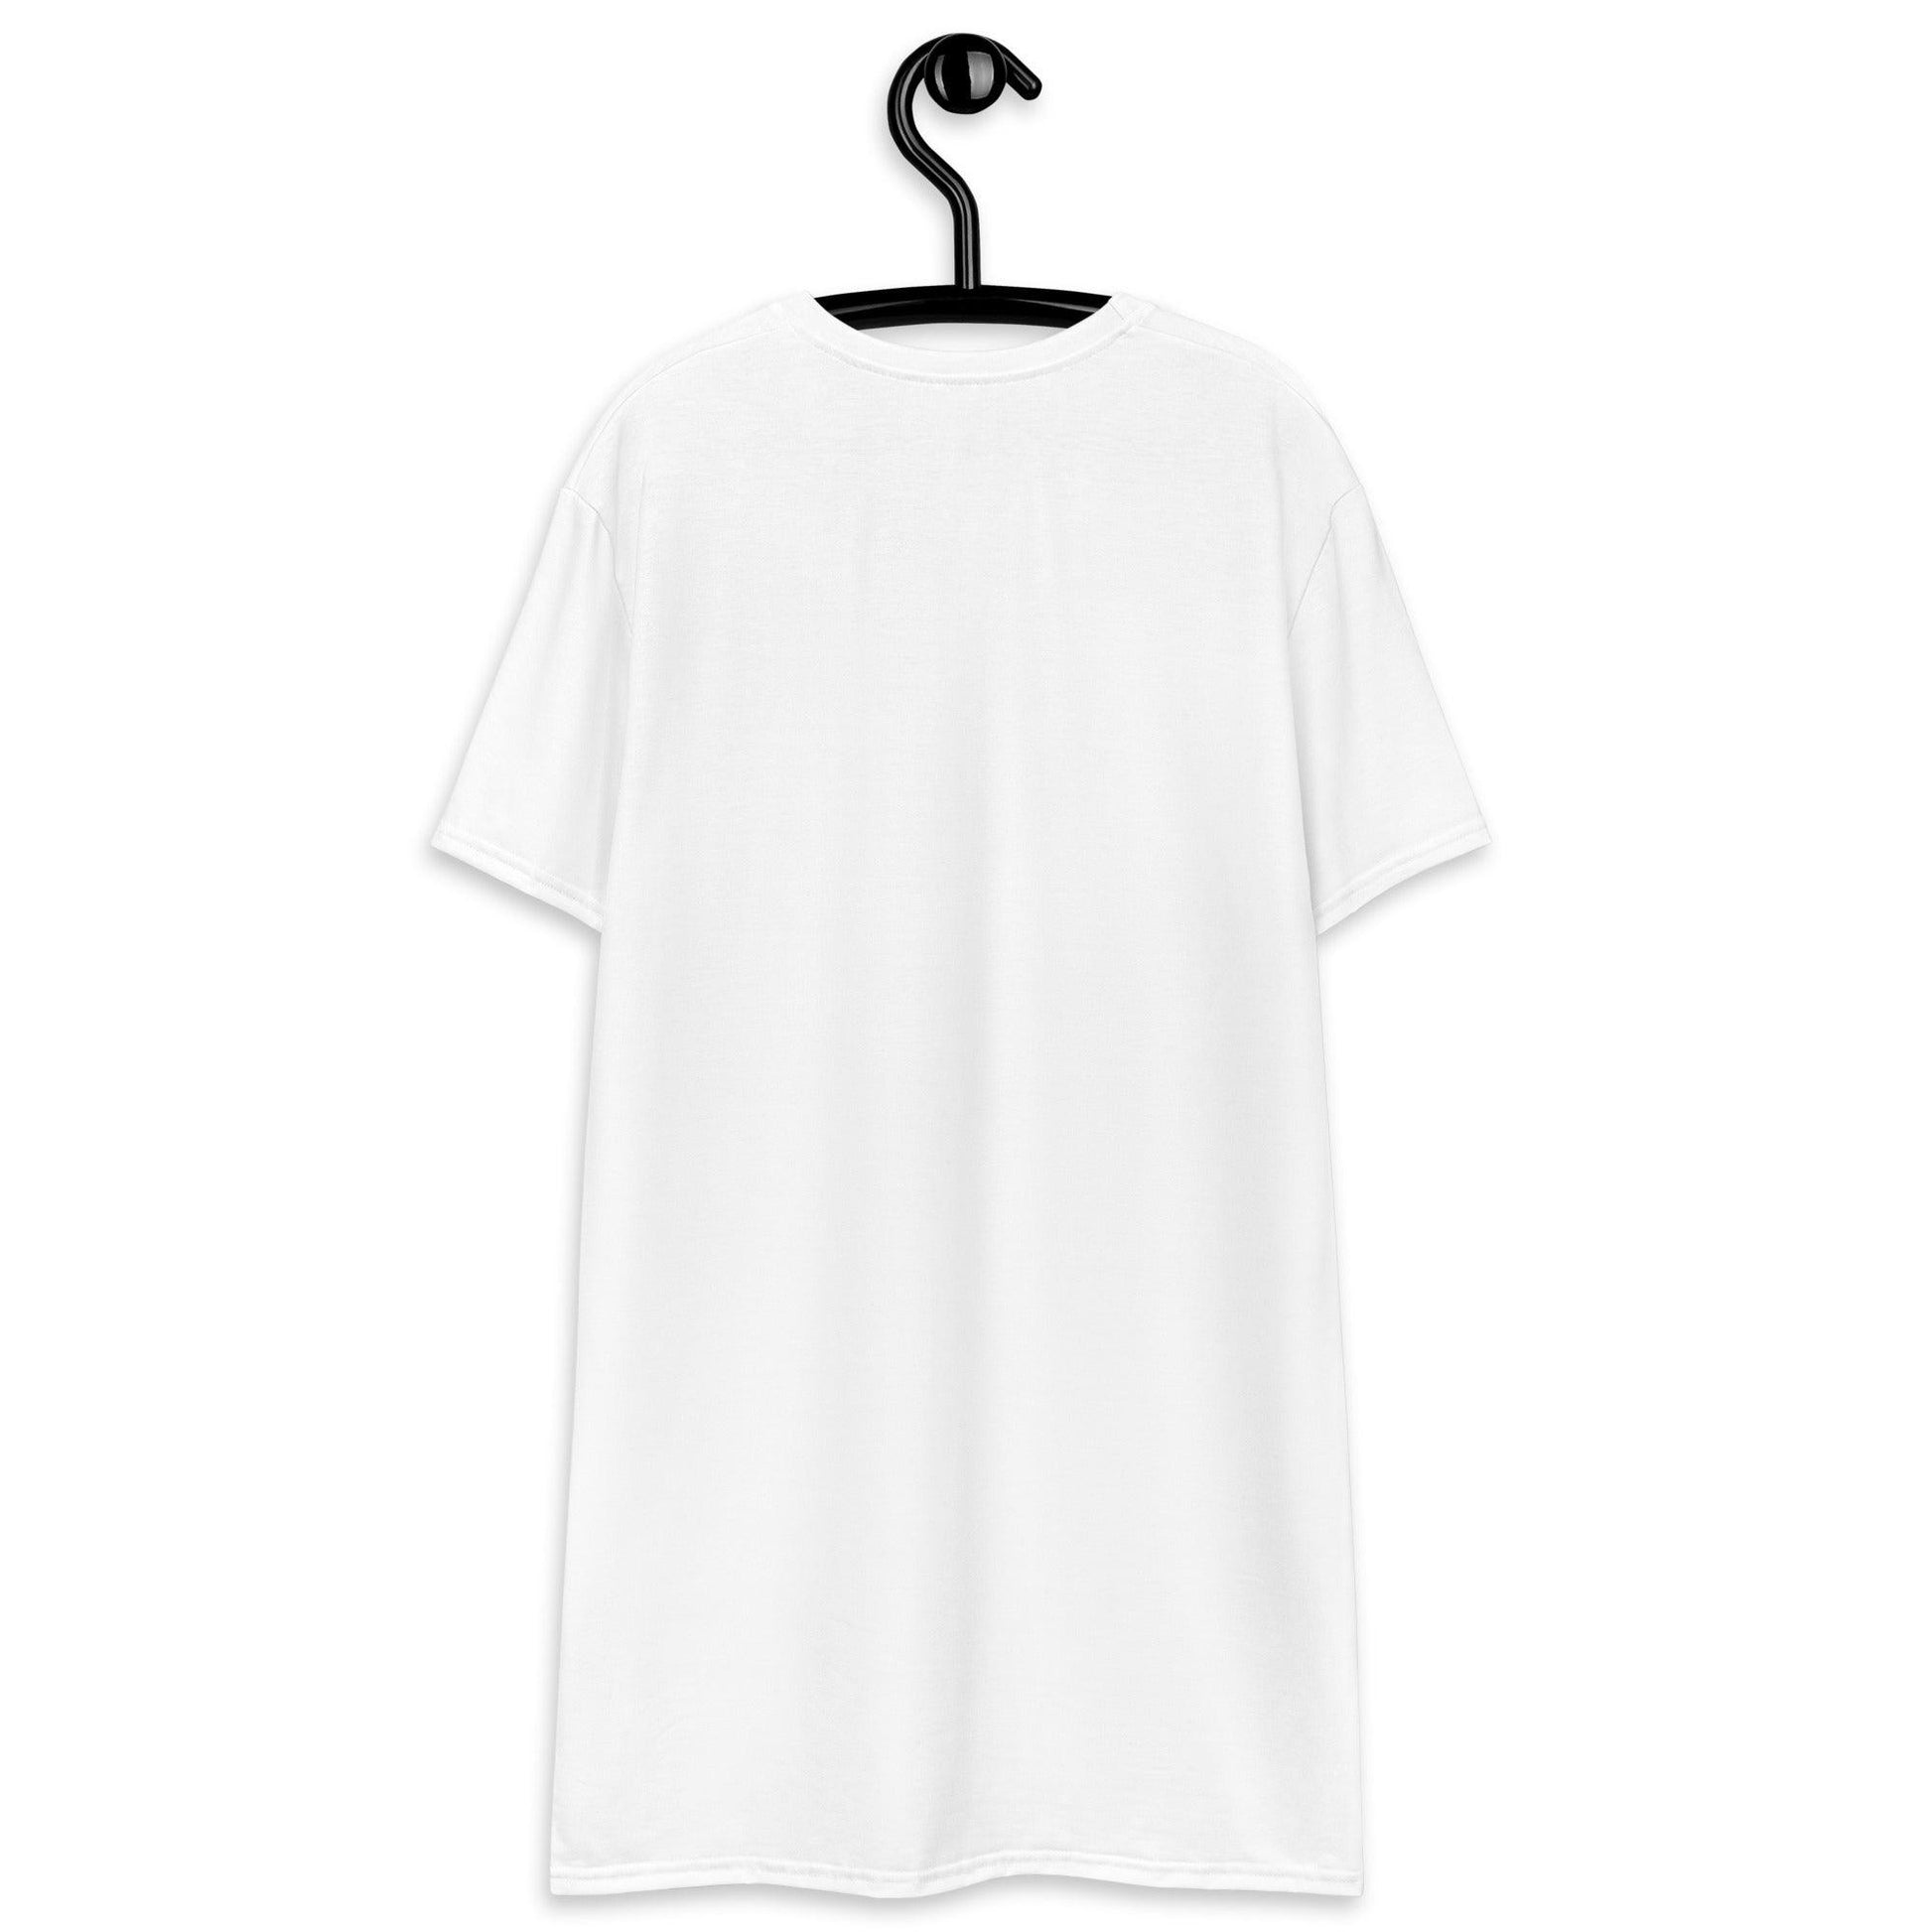 I Make Grape Decisions - Womens White T-Shirt Dress - iSAW Company